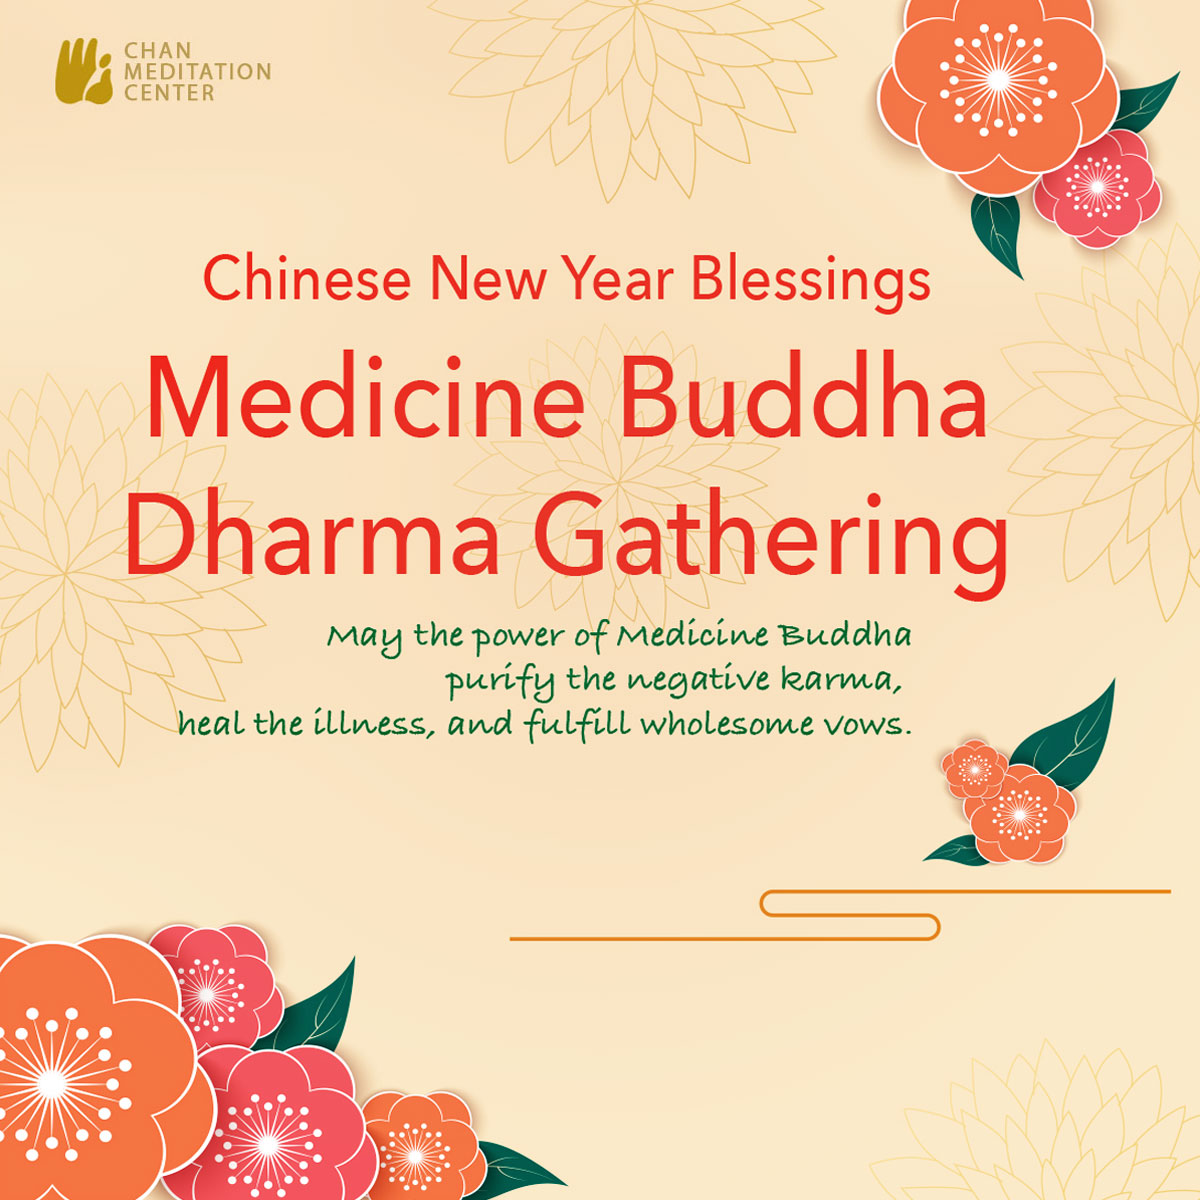 Online Medicine Buddha Chanting Service